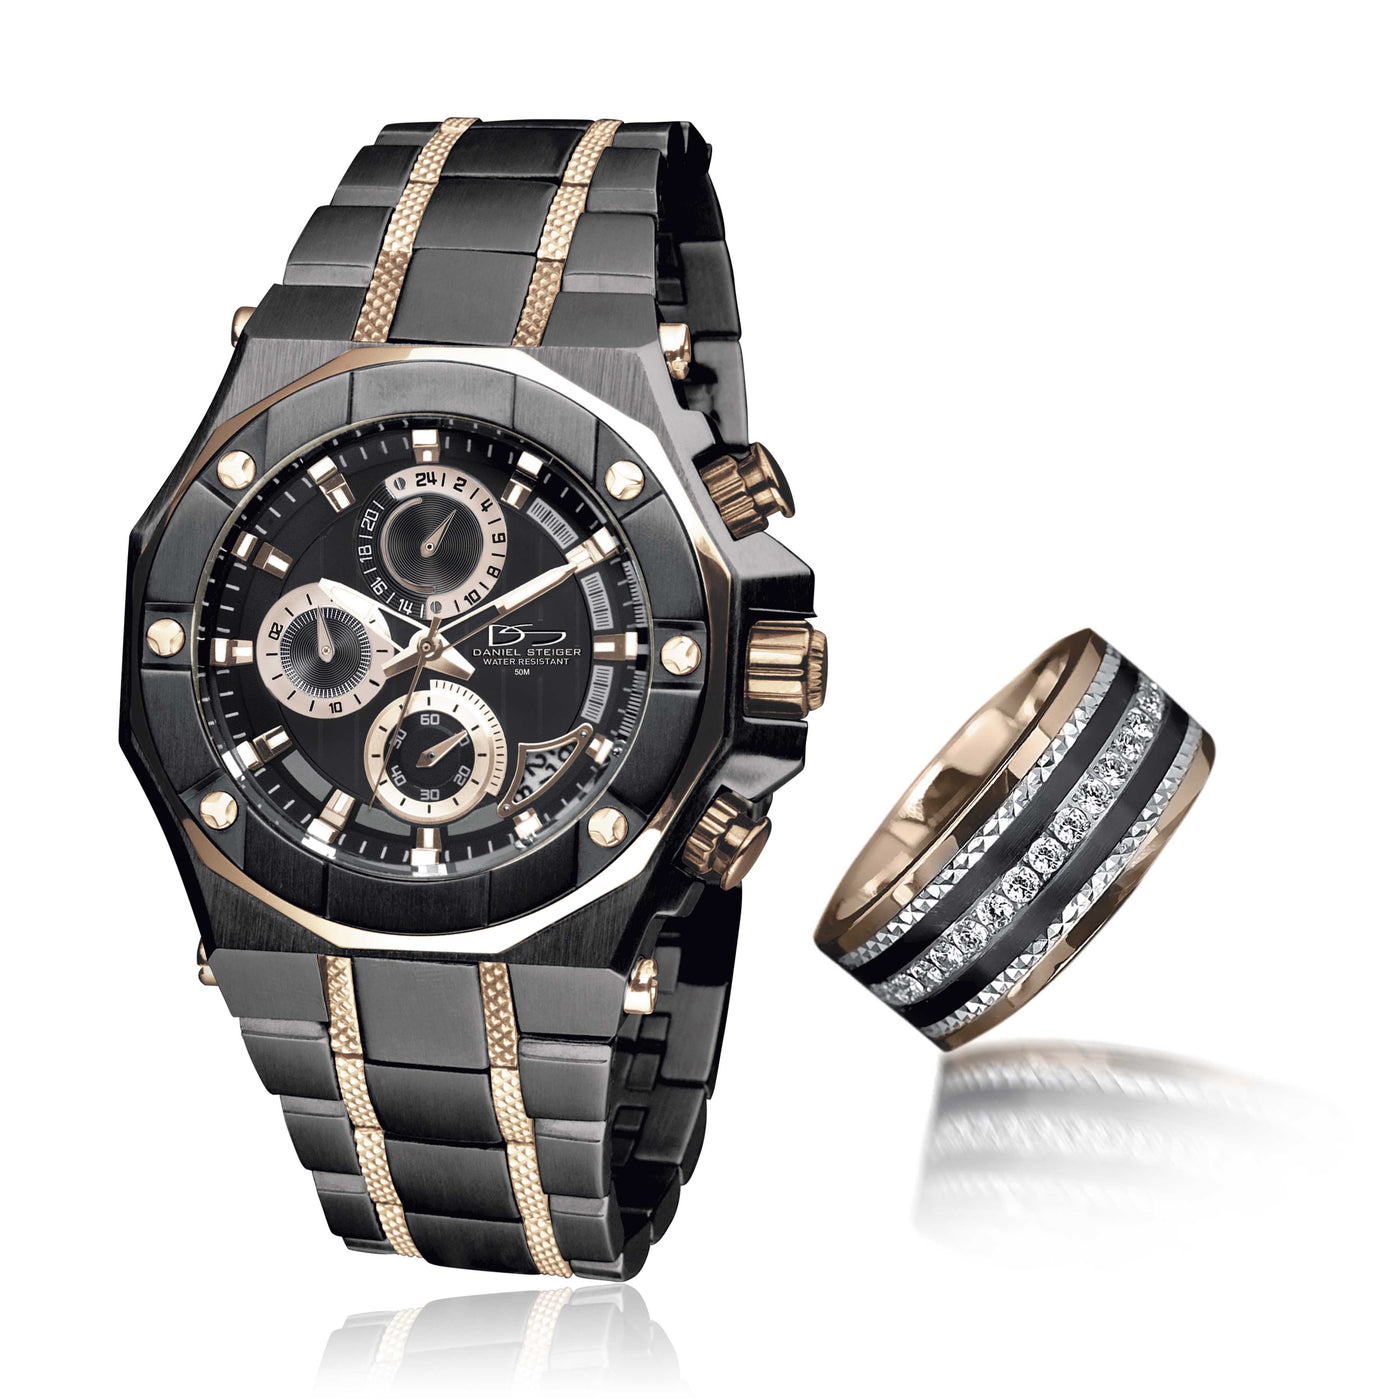 TAG Heuer Monaco V4 Phantom Watch In Carbon Matrix Composite | aBlogtoWatch